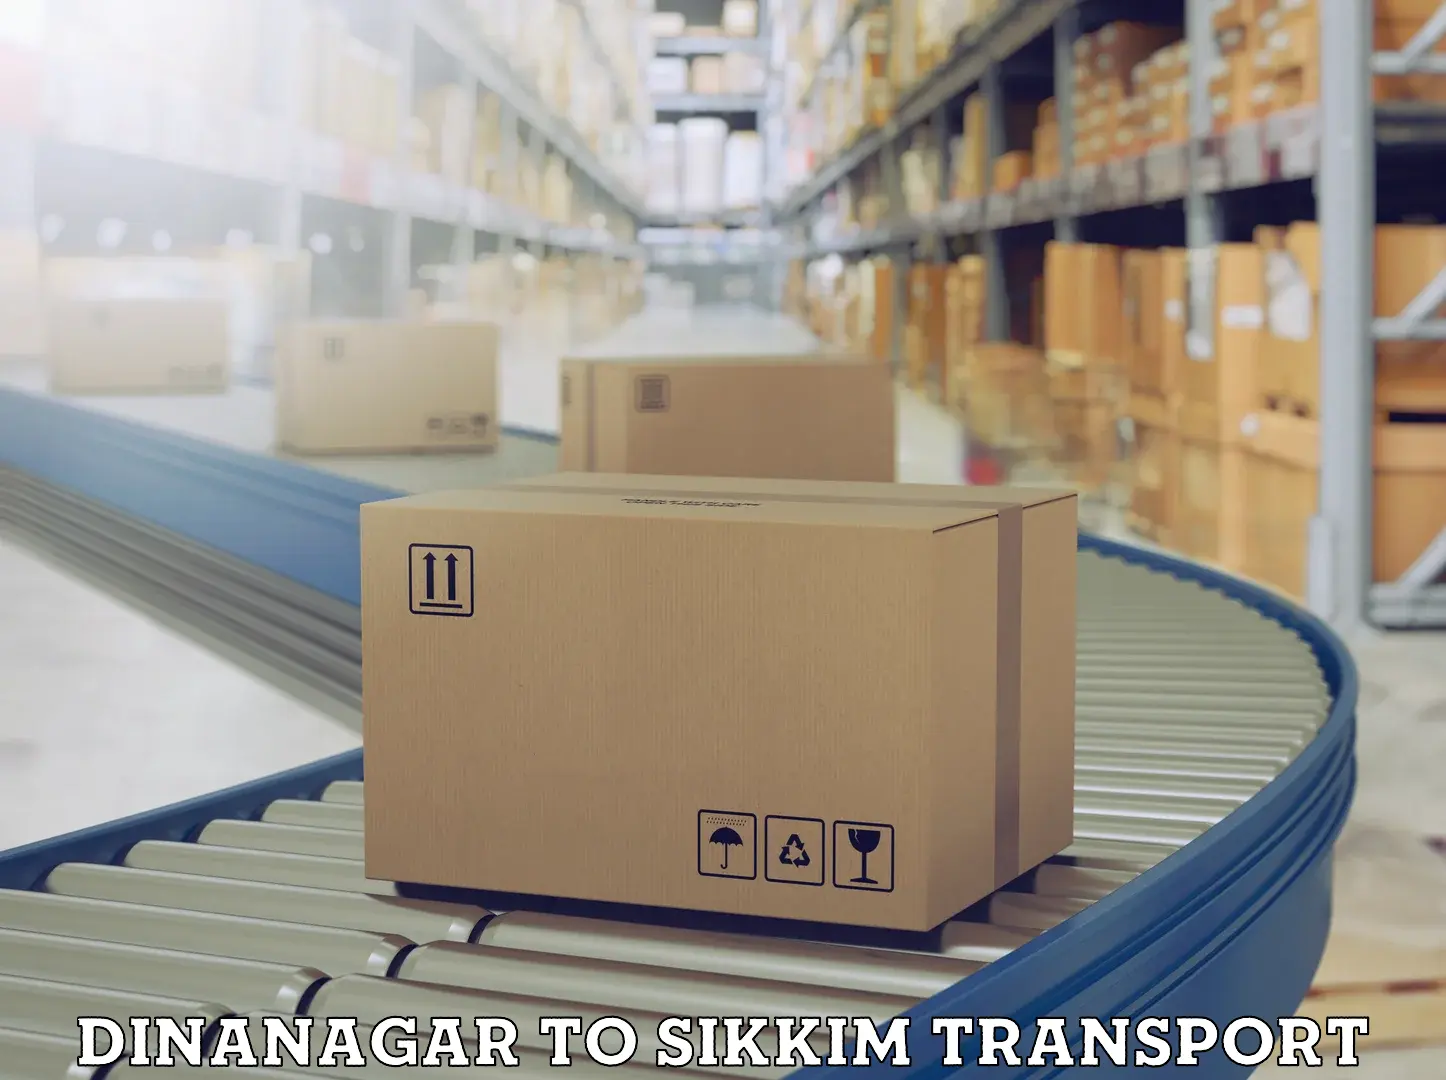 Shipping partner Dinanagar to East Sikkim